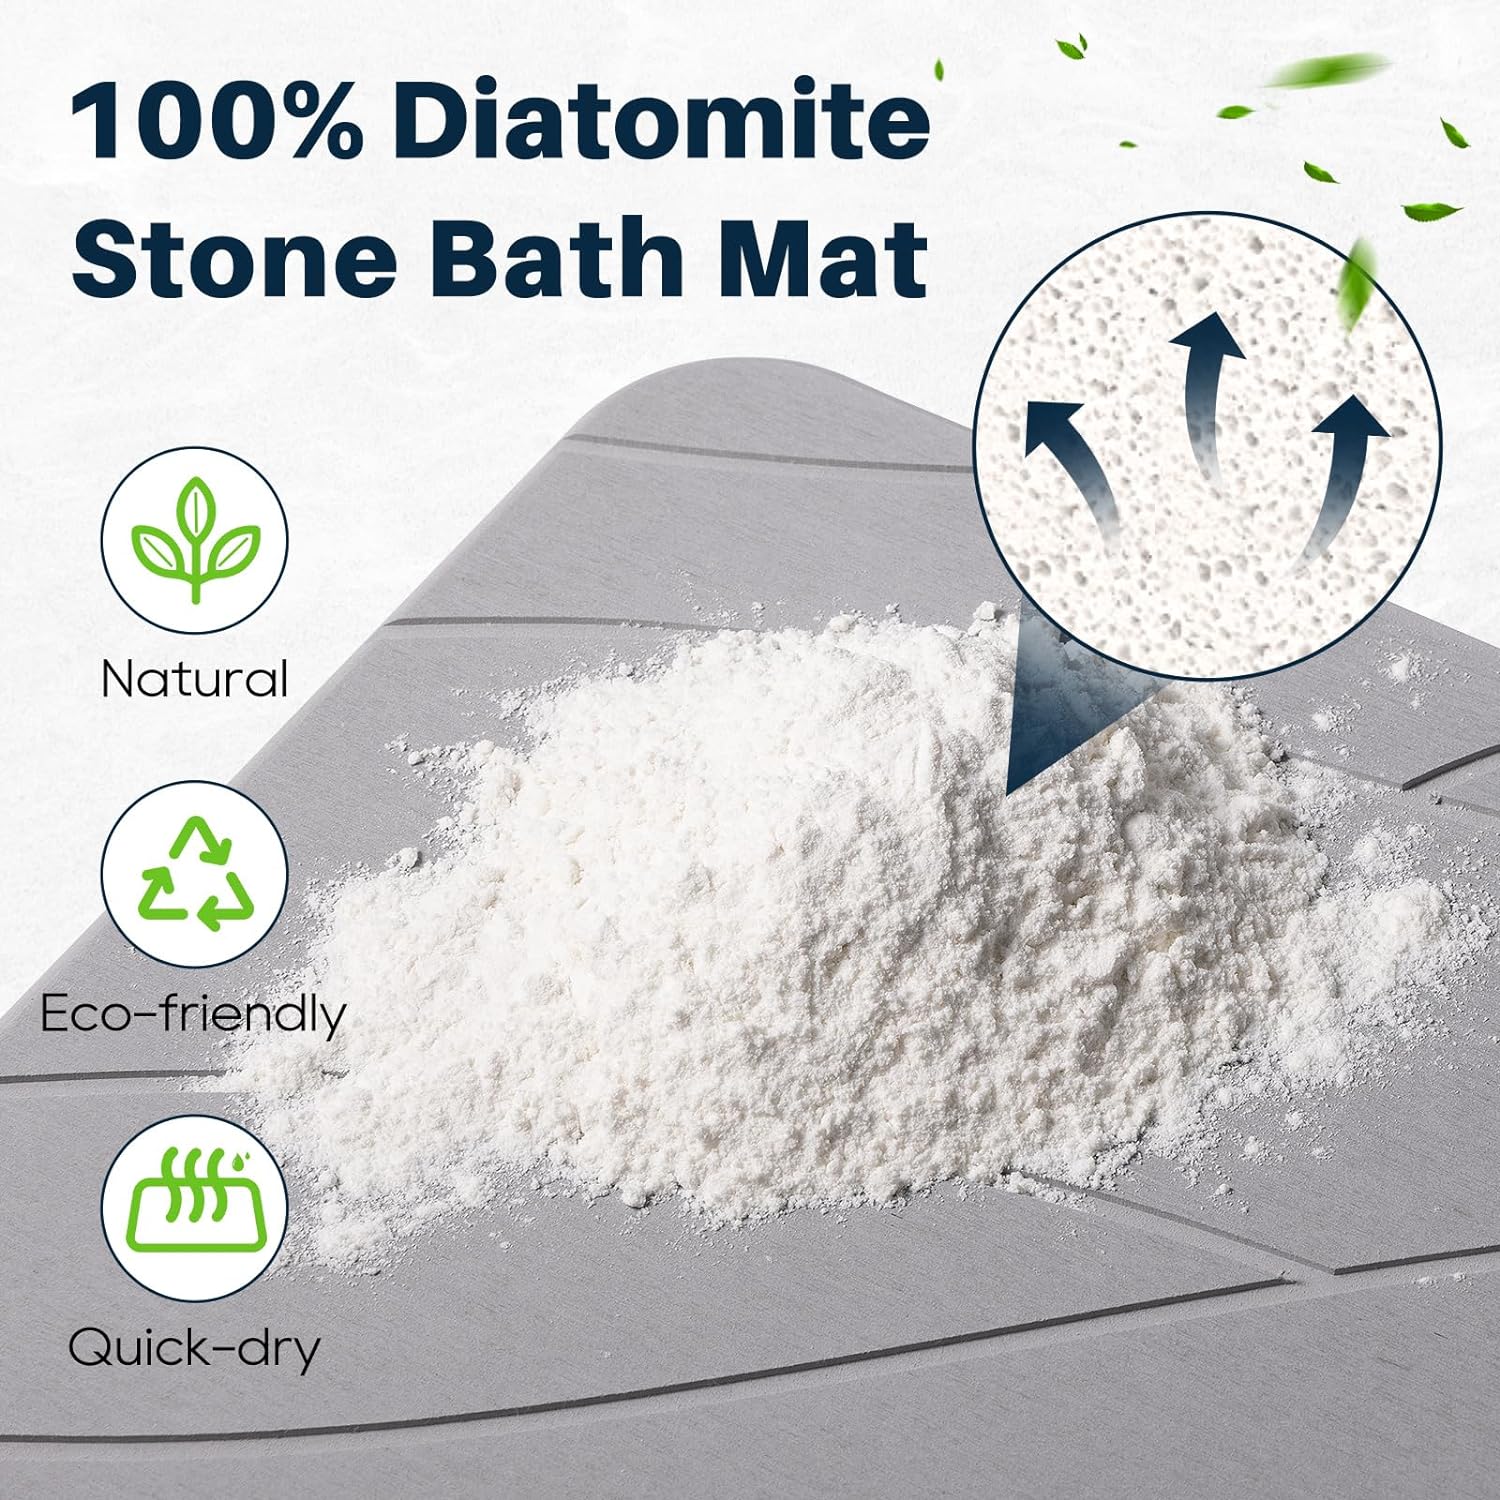 Closefriend Diatomite Stone Bath Mat - Fast Drying Bathroom Mat